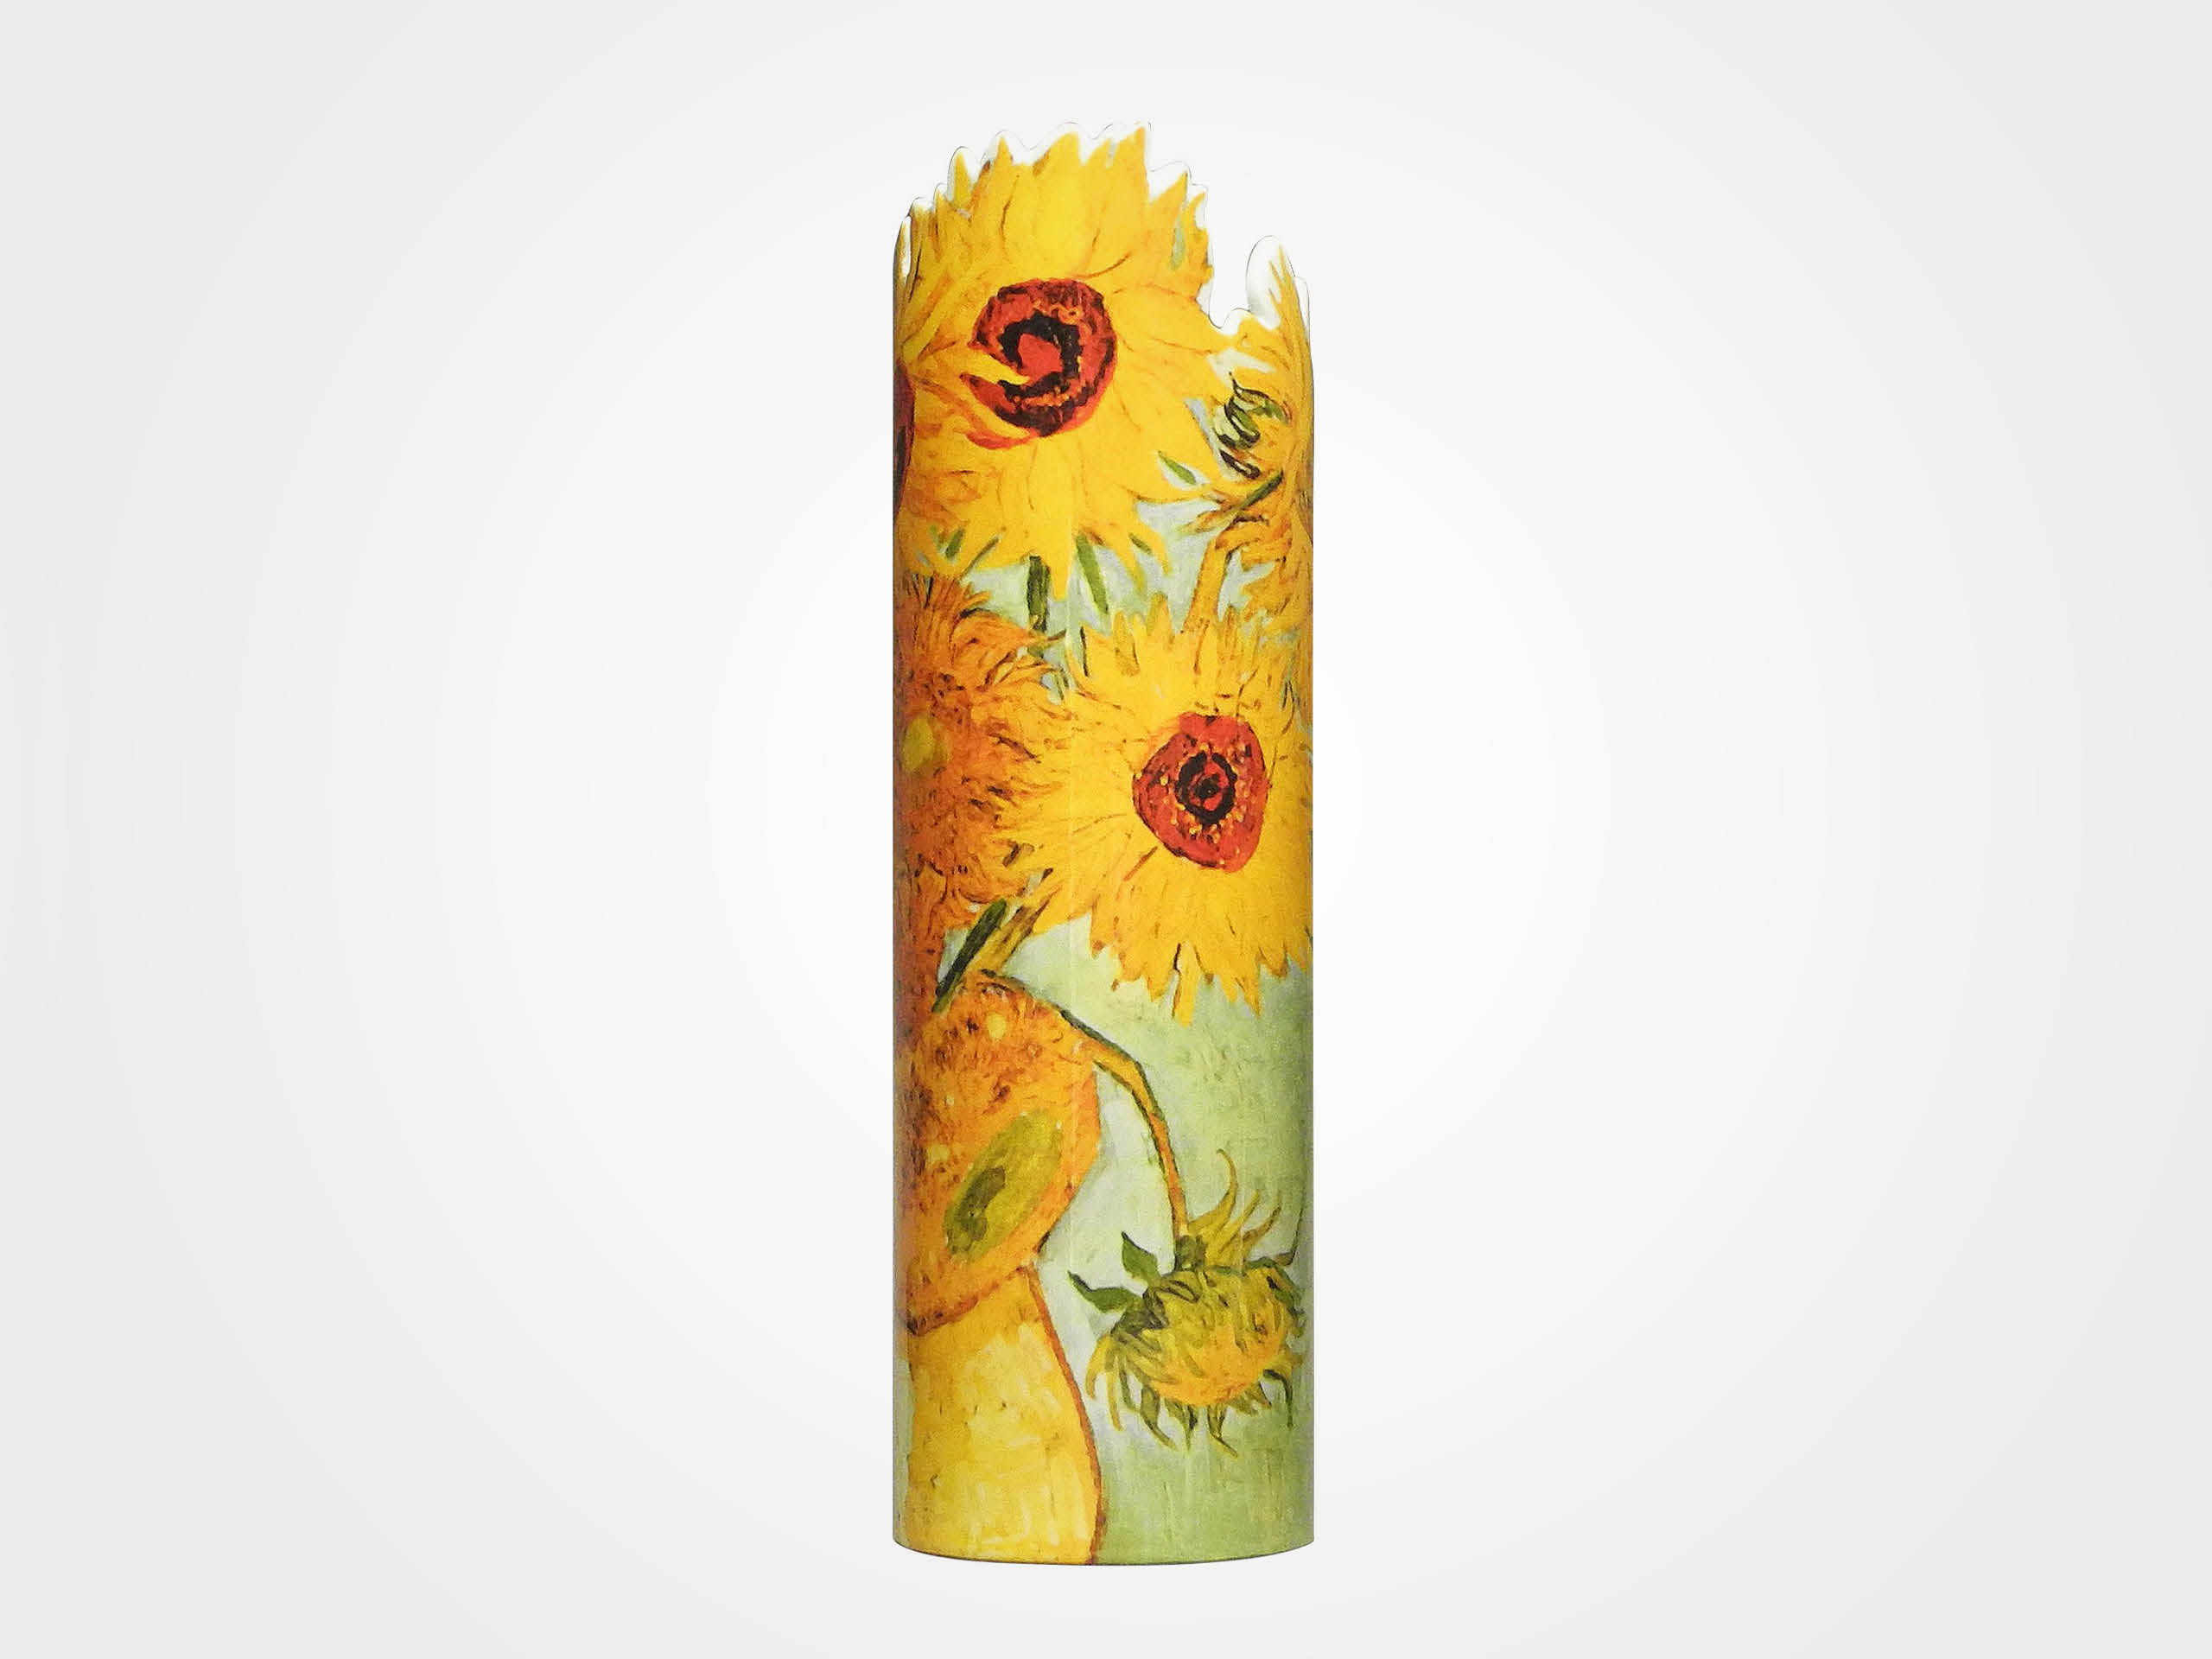 Vincent van Gogh: Keramikvase "Sonnenblumen" (1888)